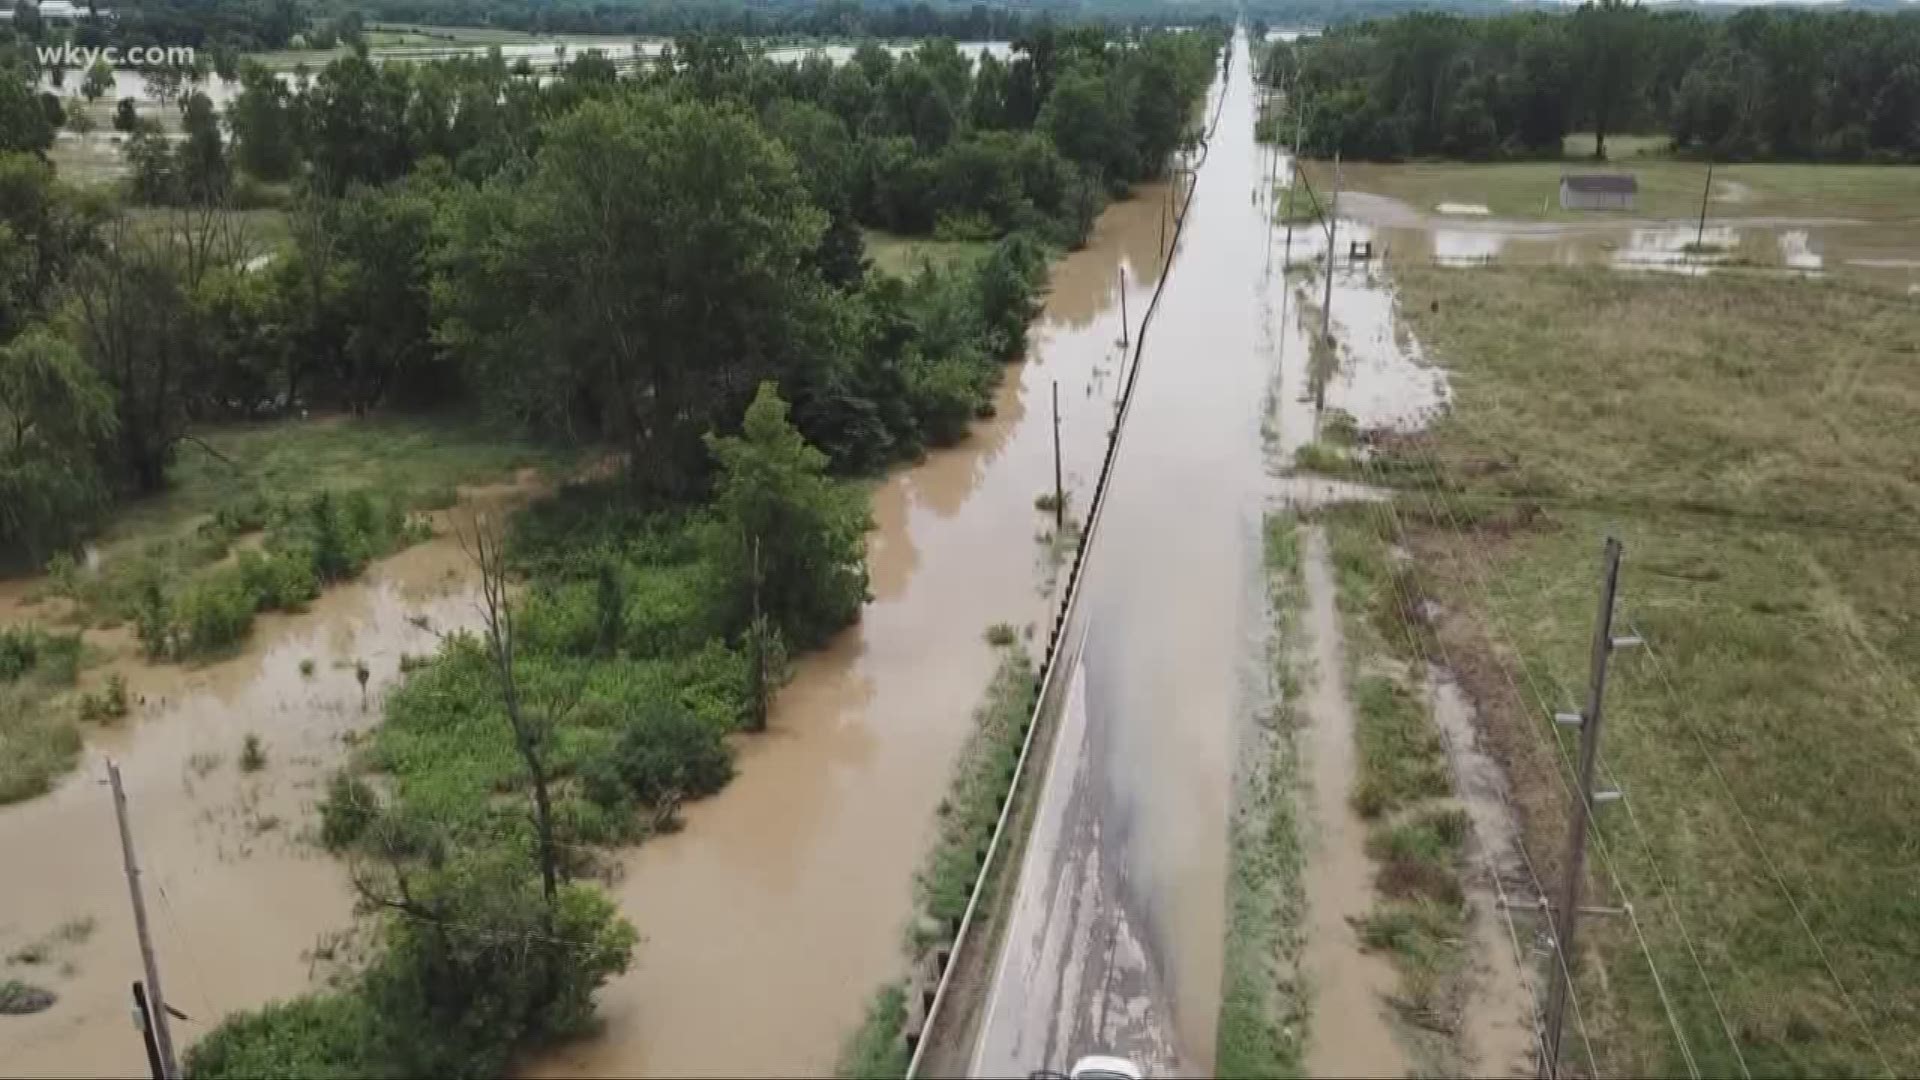 Wayne County damage shows wrath of severe flooding